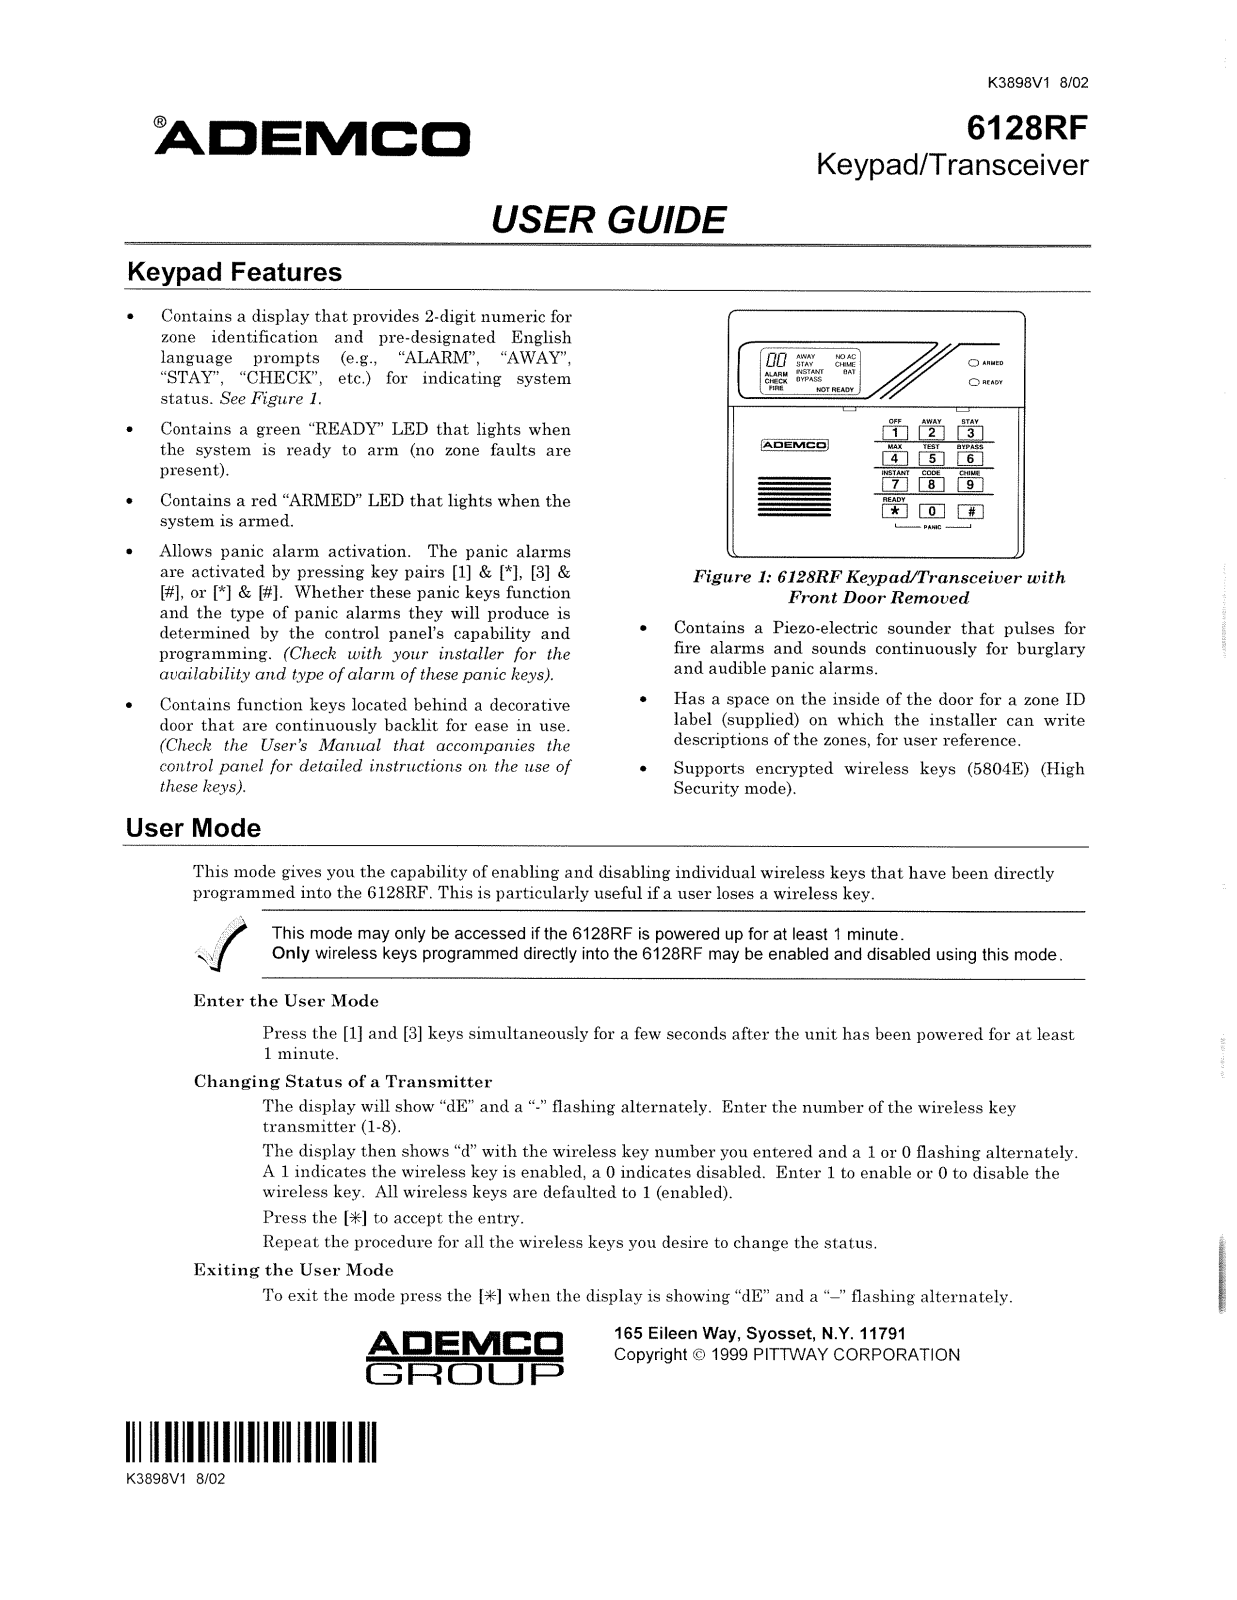 Honeywell ADEMCO  6128RF User Guide